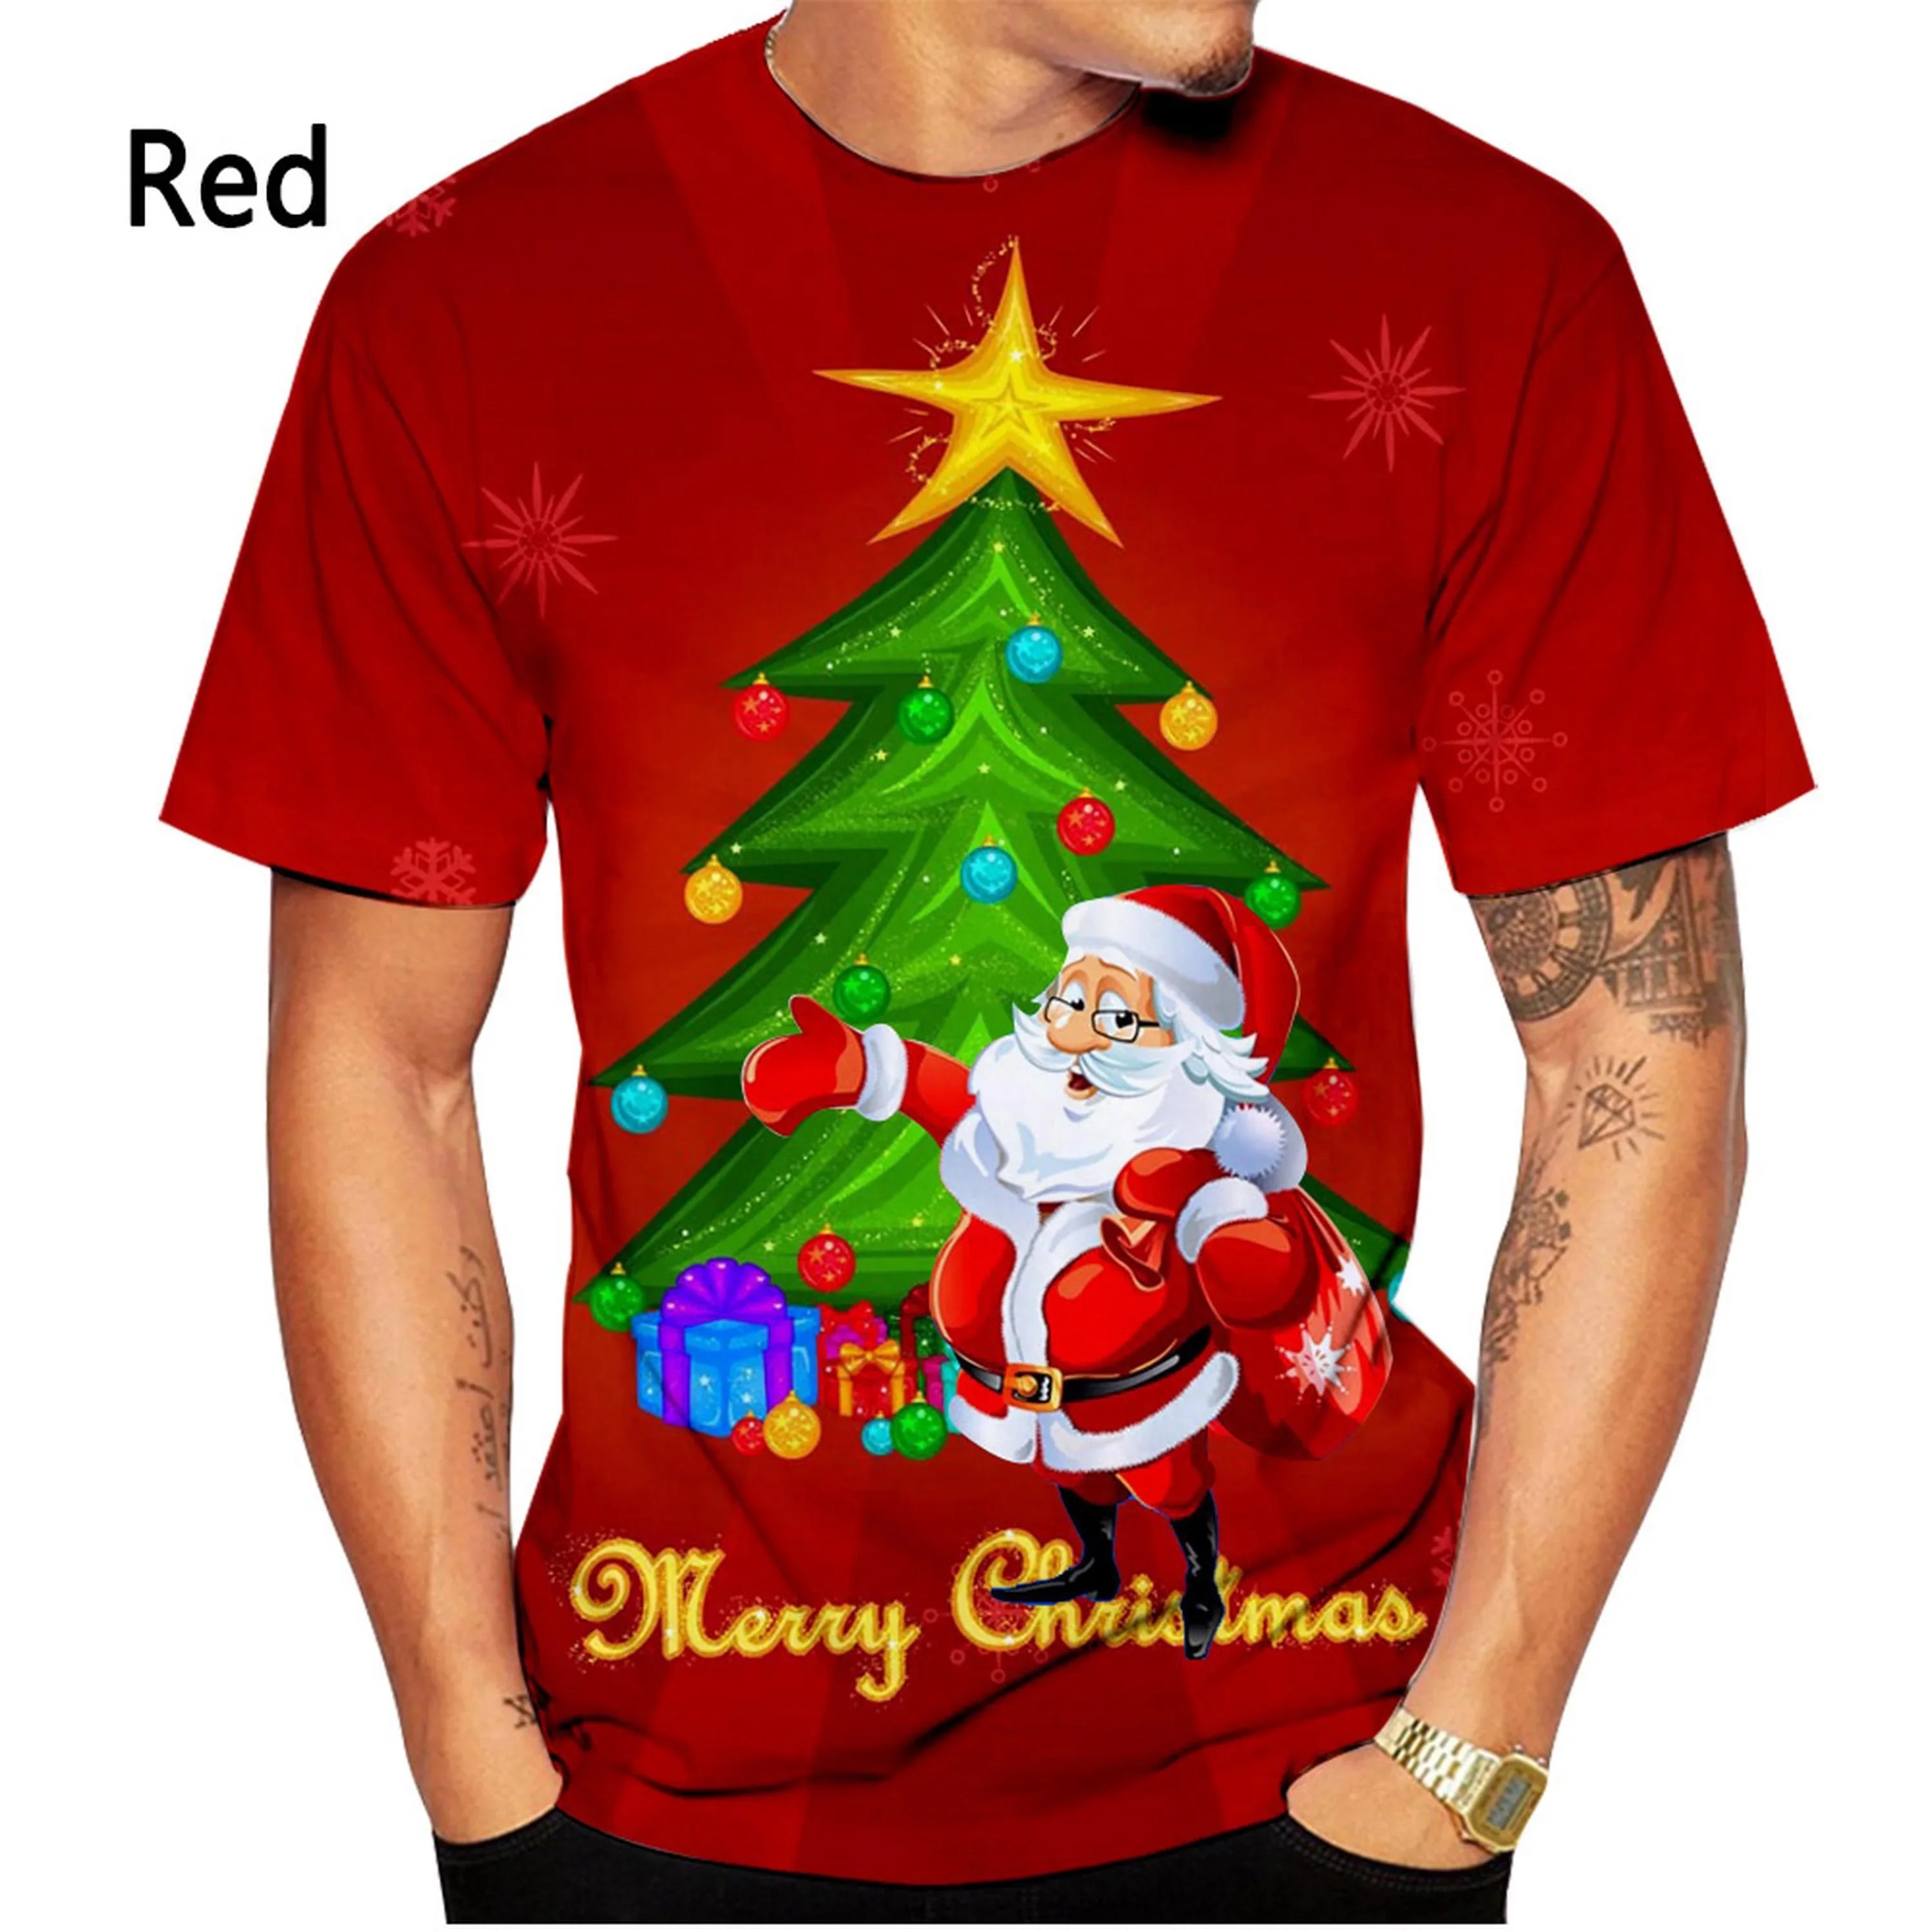 3D Printed T-shirts Christmas T-shirts Men and Women Short Sleeved Santa Shirt Tops-Red-XS-All10dollars.com